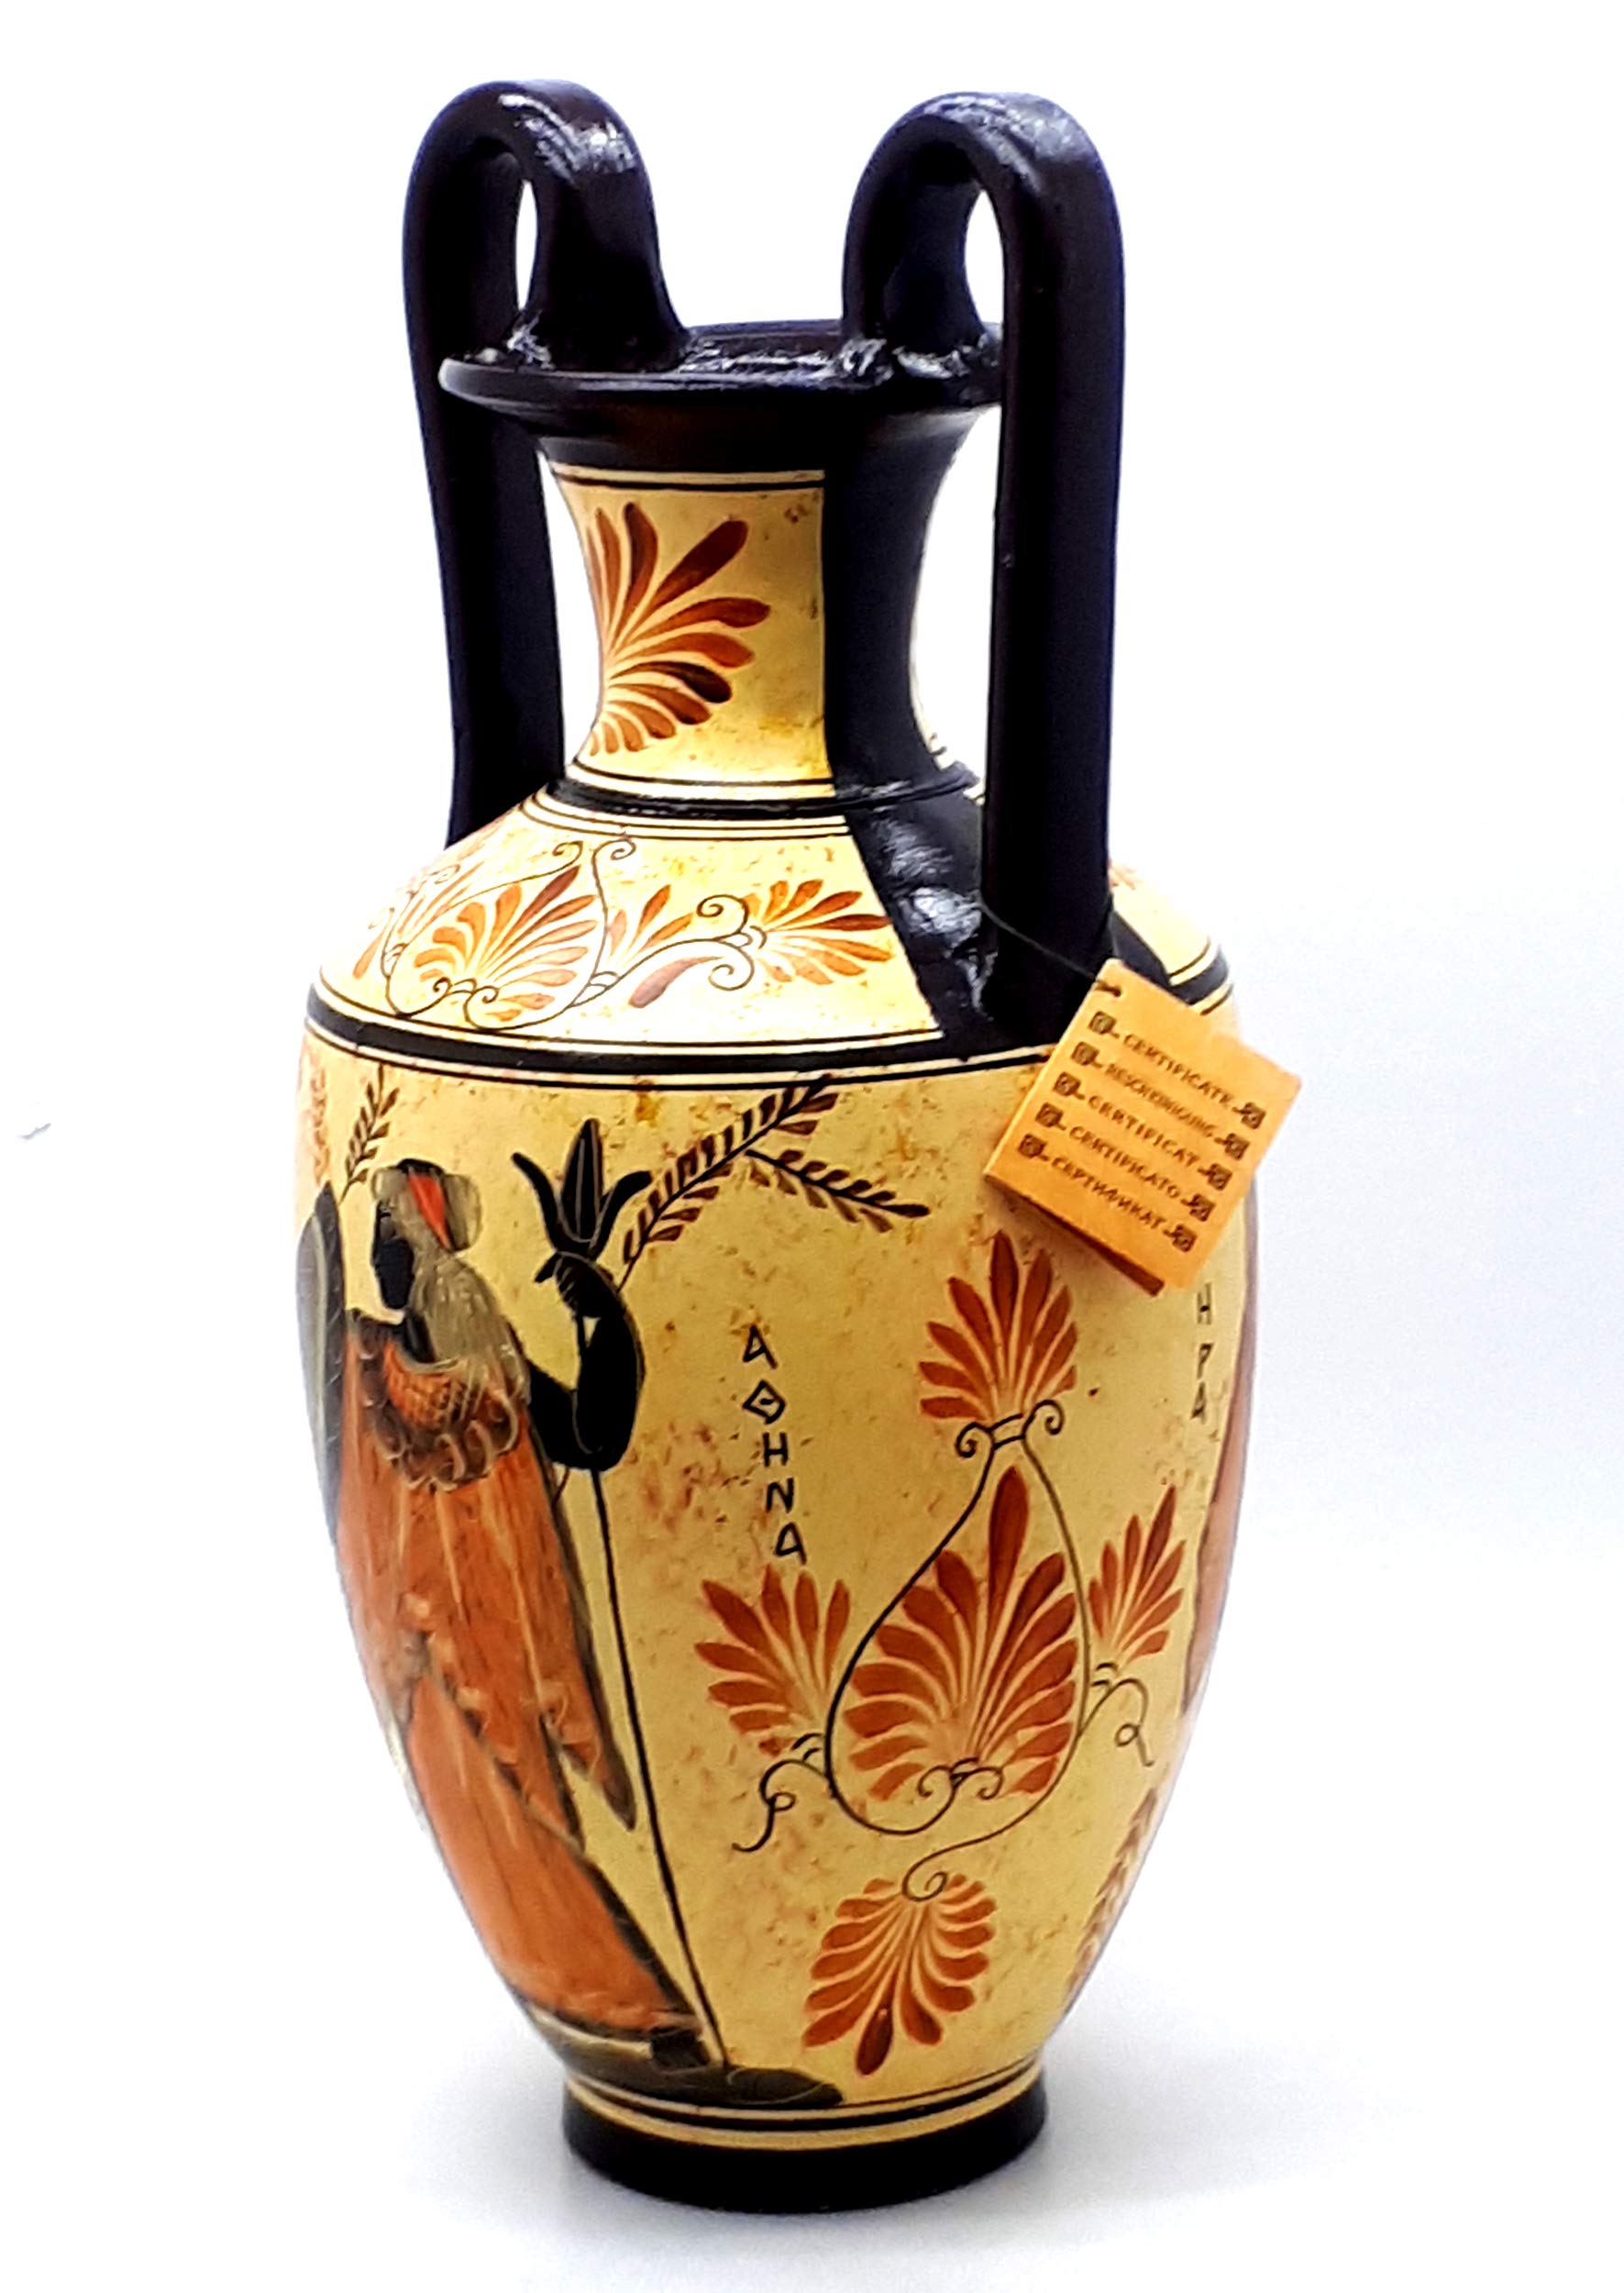 Amphora Vase Greek Ceramic Pottery Painting Goddess Hera & God Zeus